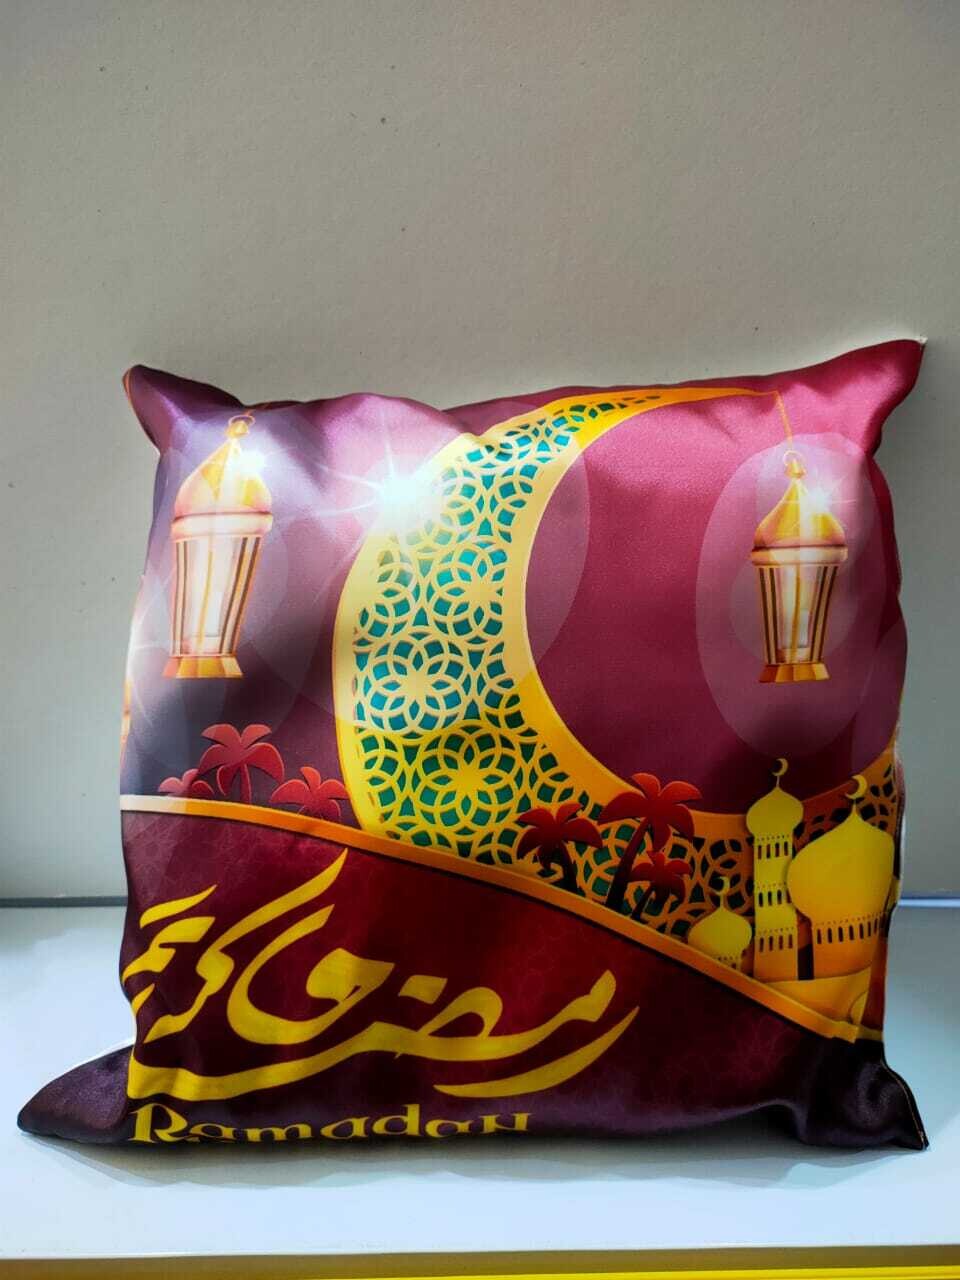 ​Ramadan small pillow